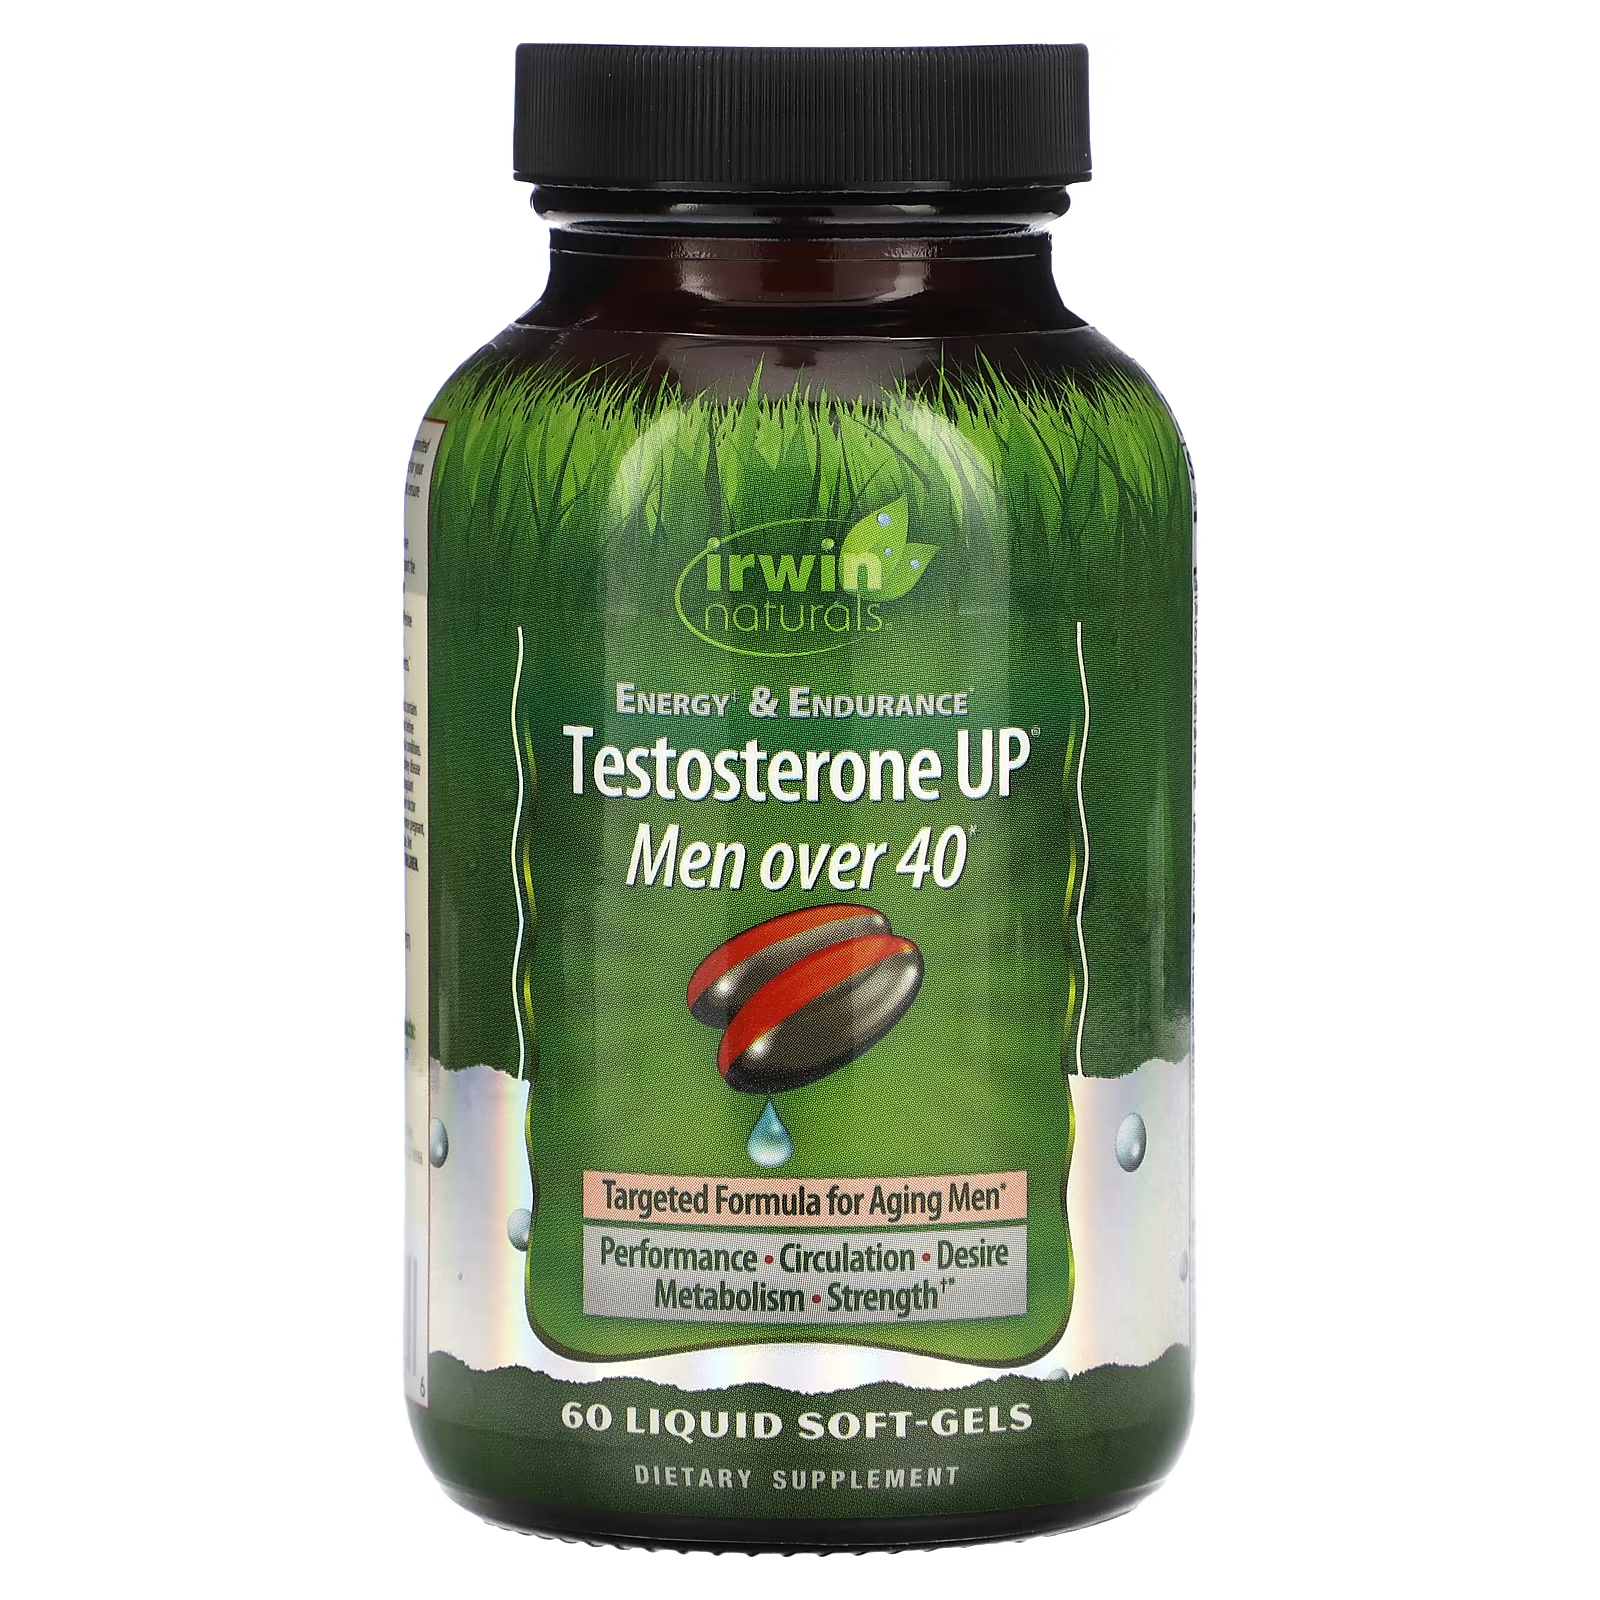 Пищевая добавка Irwin Naturals Testosterone UP для мужчин старше 40 лет, 60 жидких таблеток